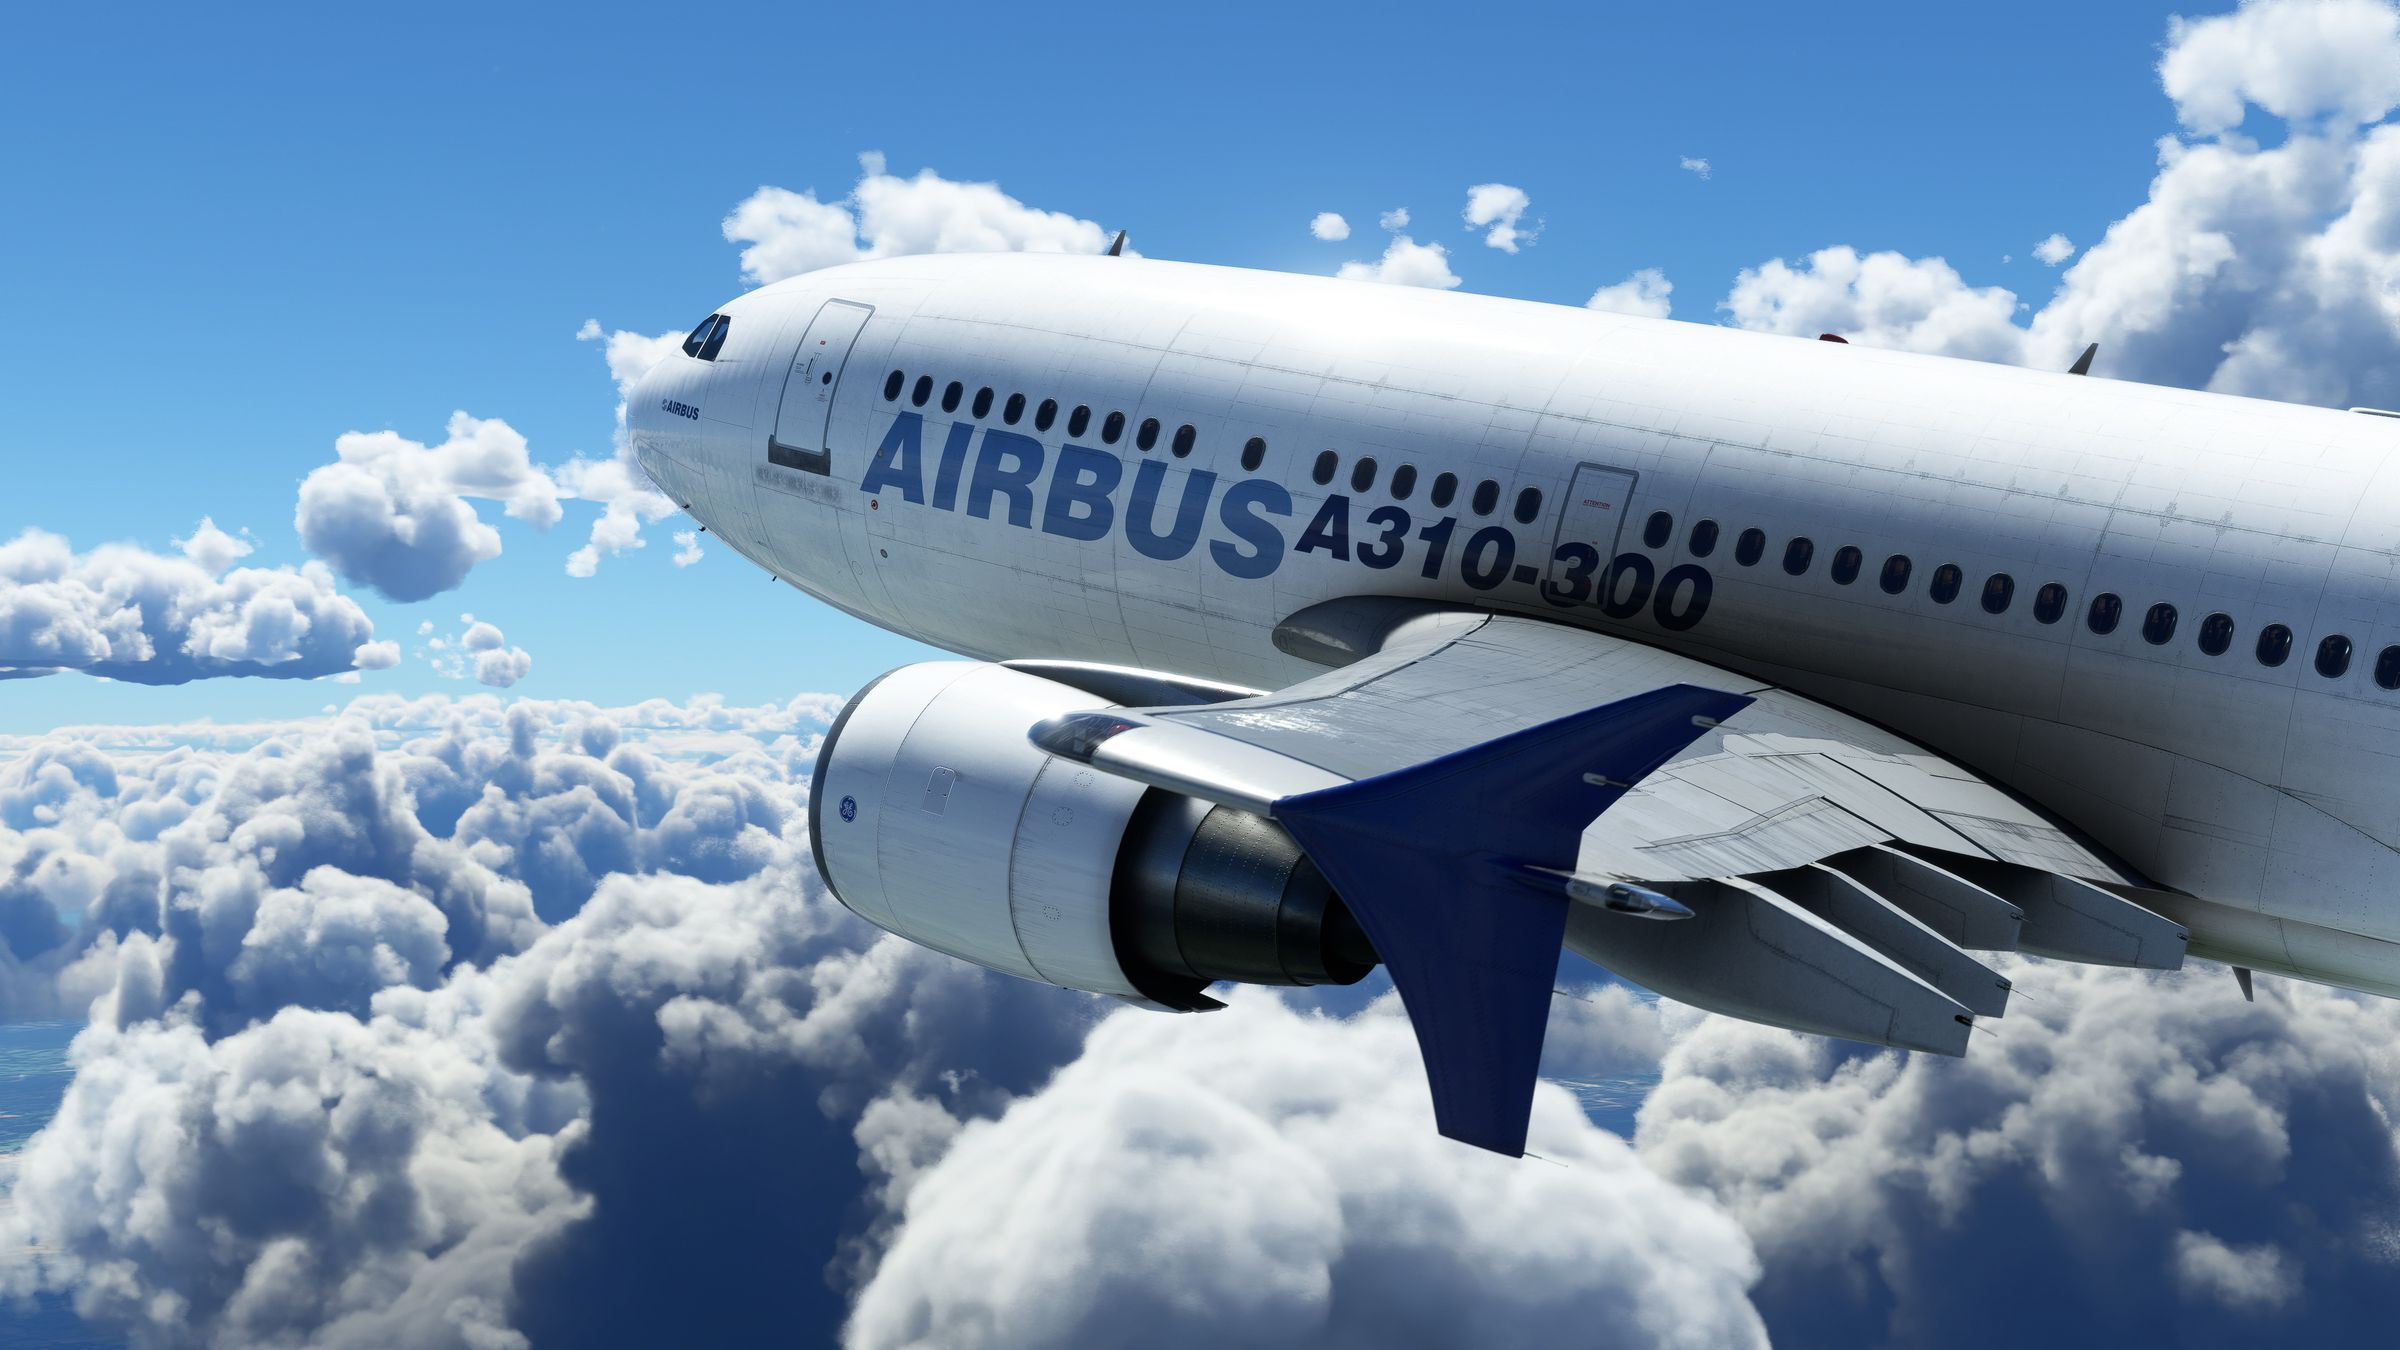 Airbus A310, Microsoft Flight Simulator'da yeniden oluşturuldu.